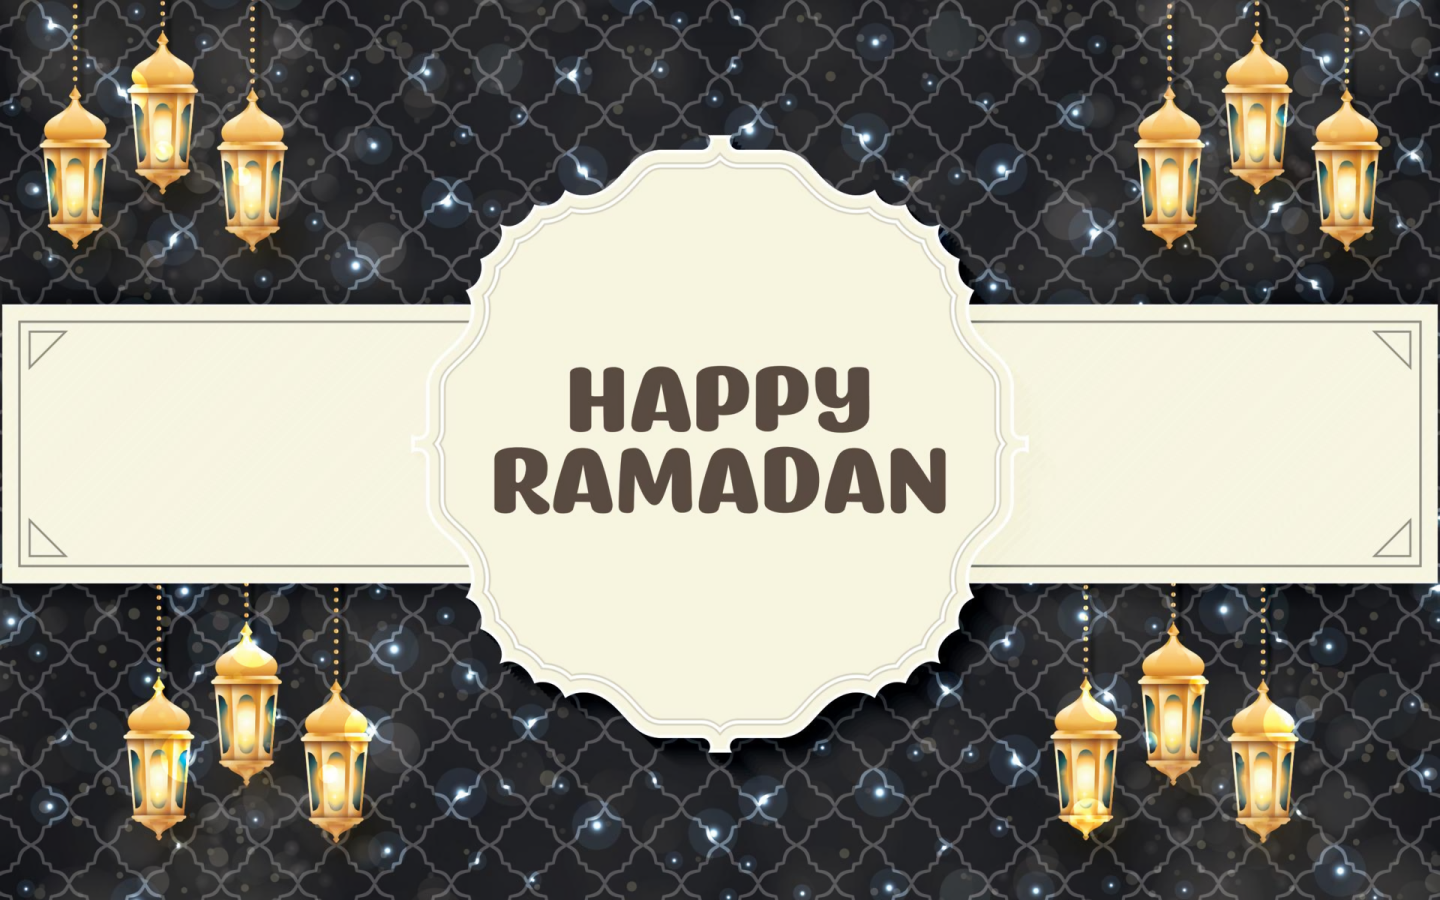 Happy Ramadan Greeting Card With Golden Lanterns